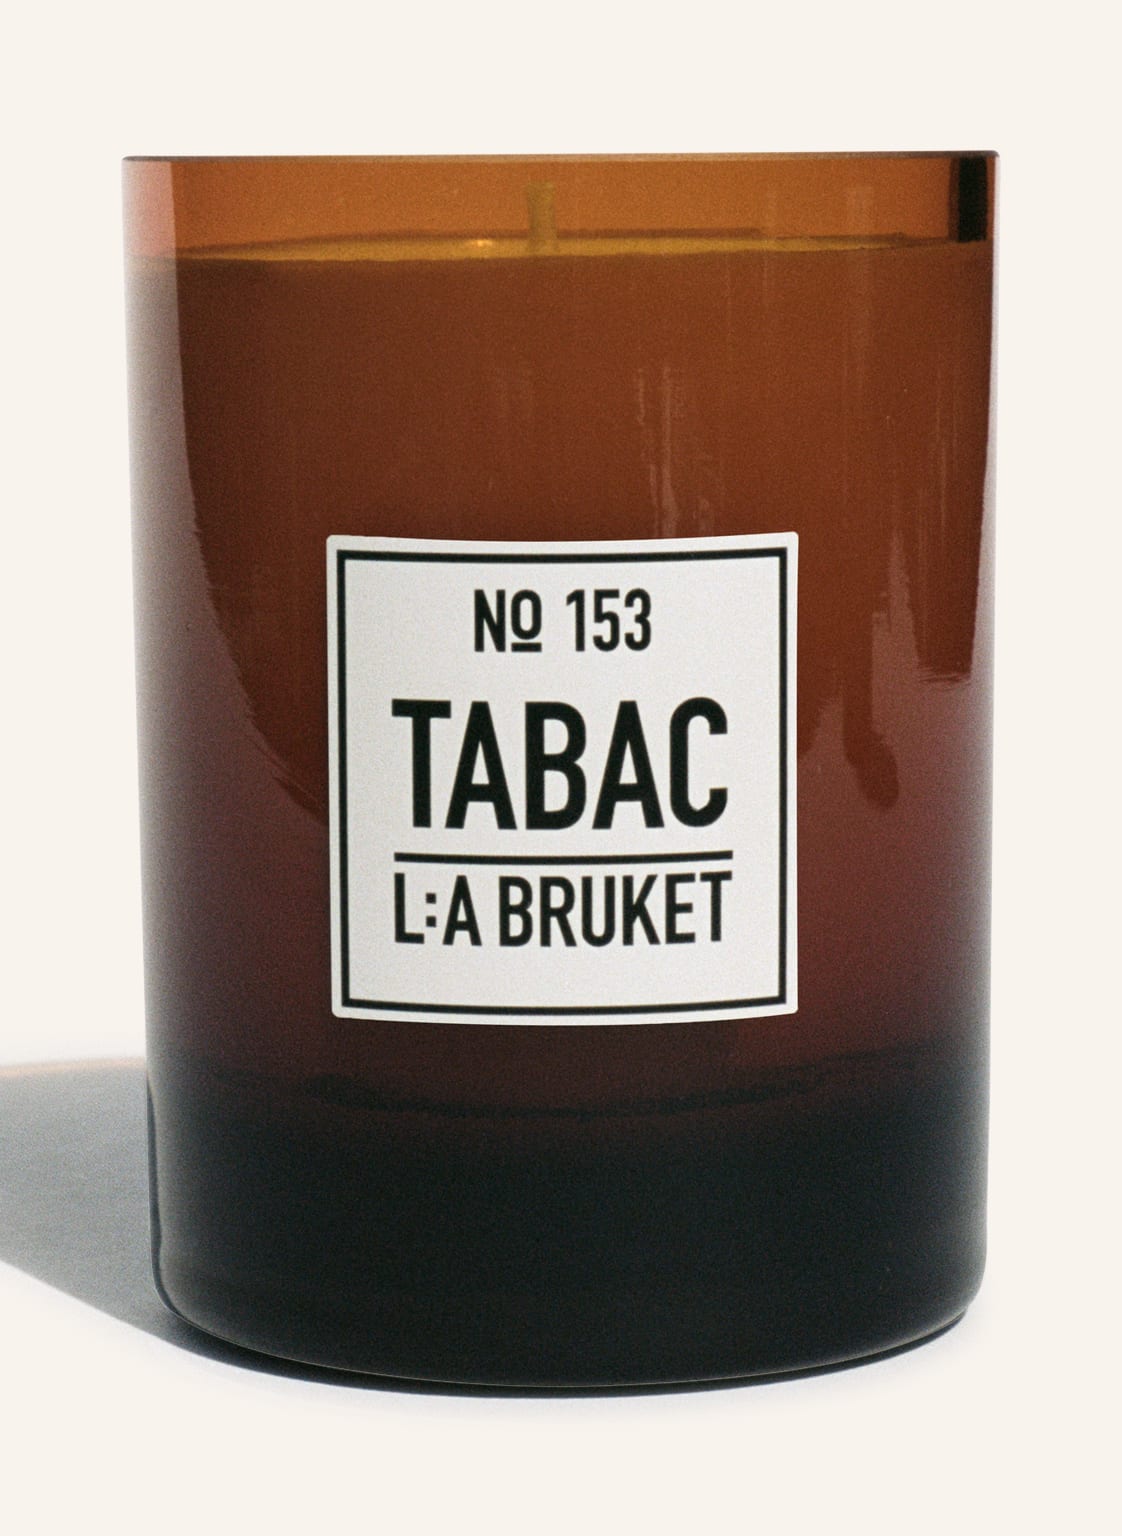 L:A Bruket Duftkerze No. 153 Tabac gelb von L:A BRUKET